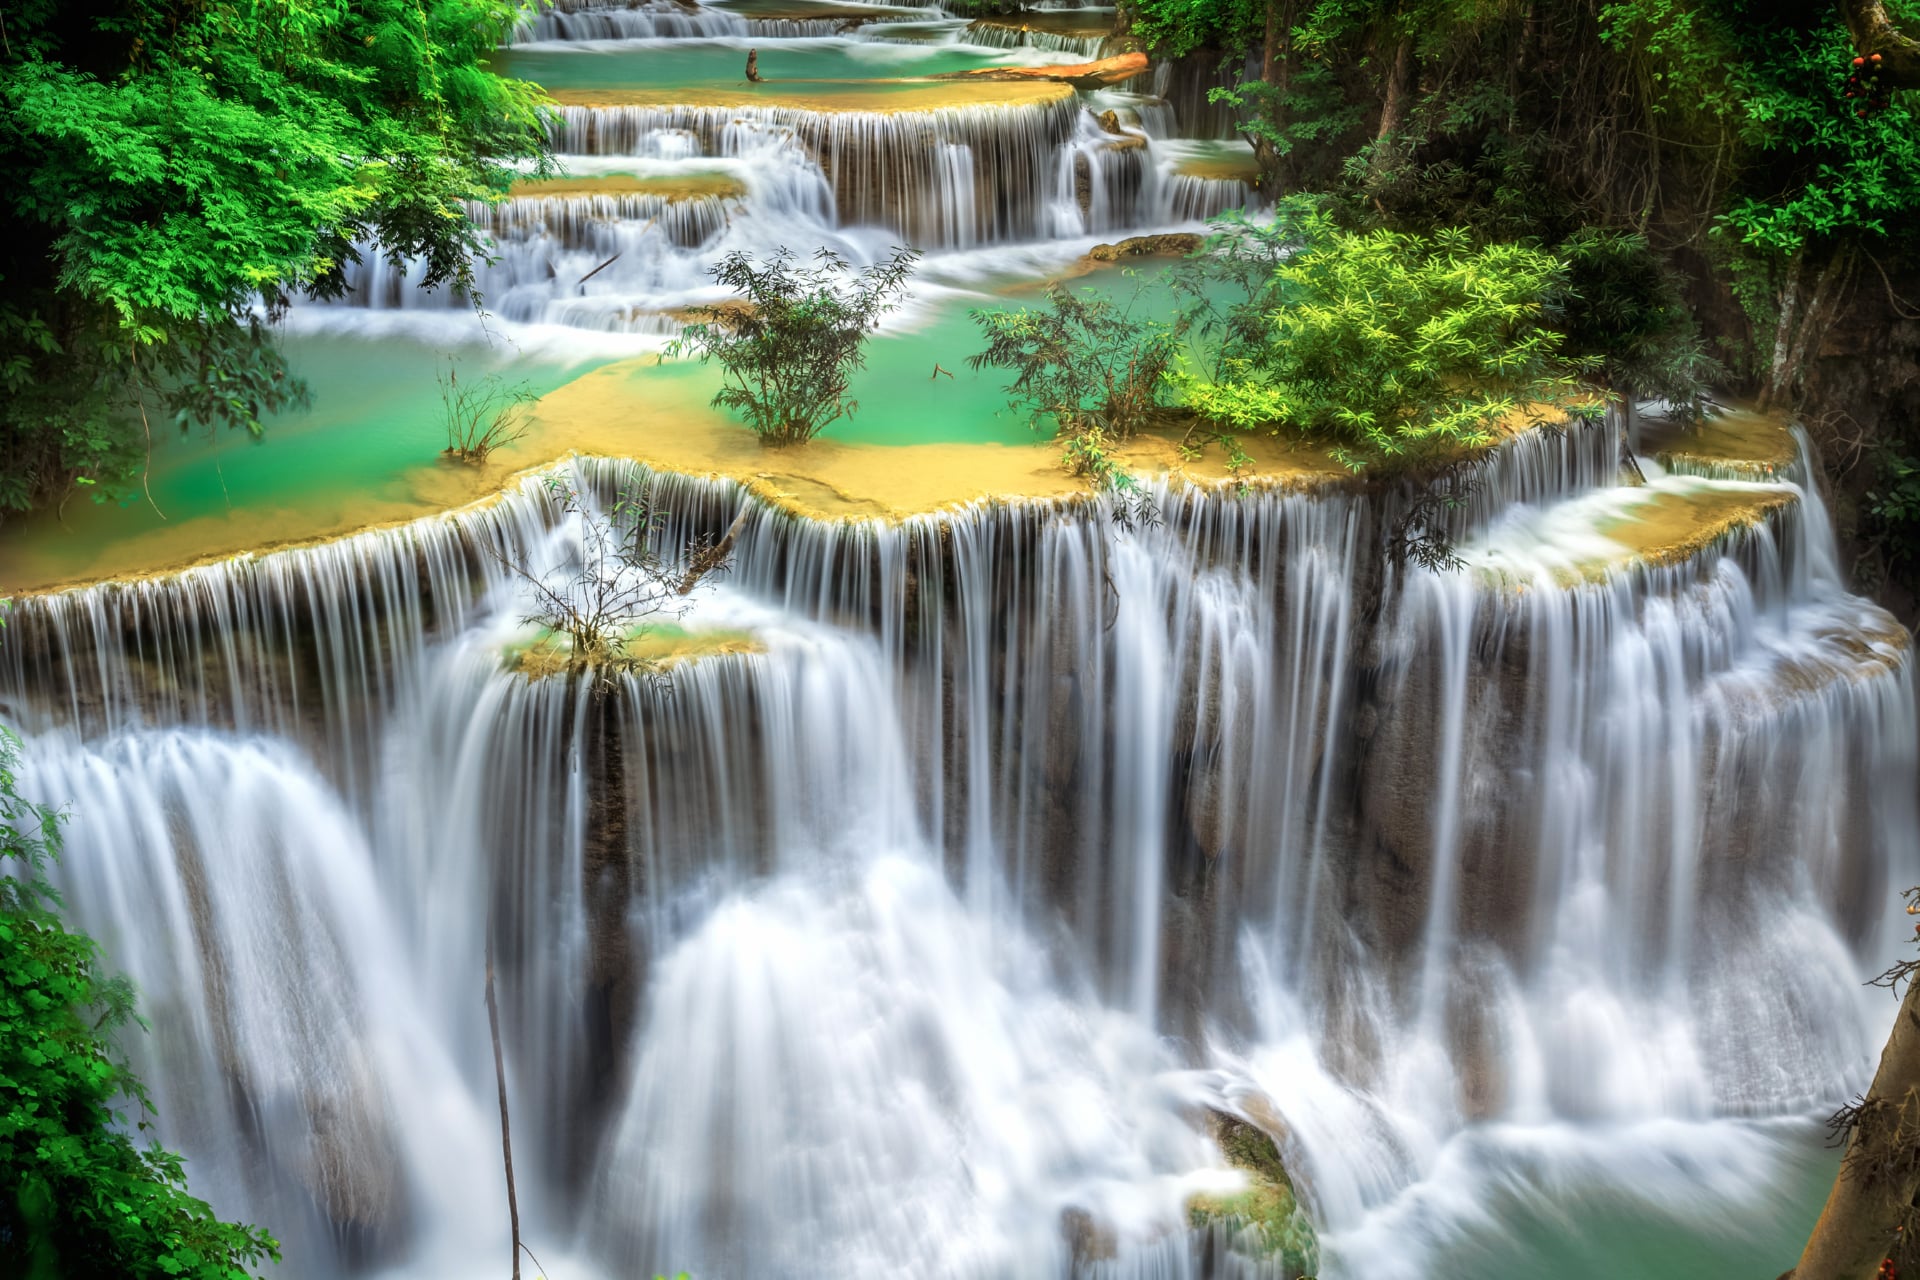 Huai Mae Khamin Waterfall at 1024 x 1024 iPad size wallpapers HD quality